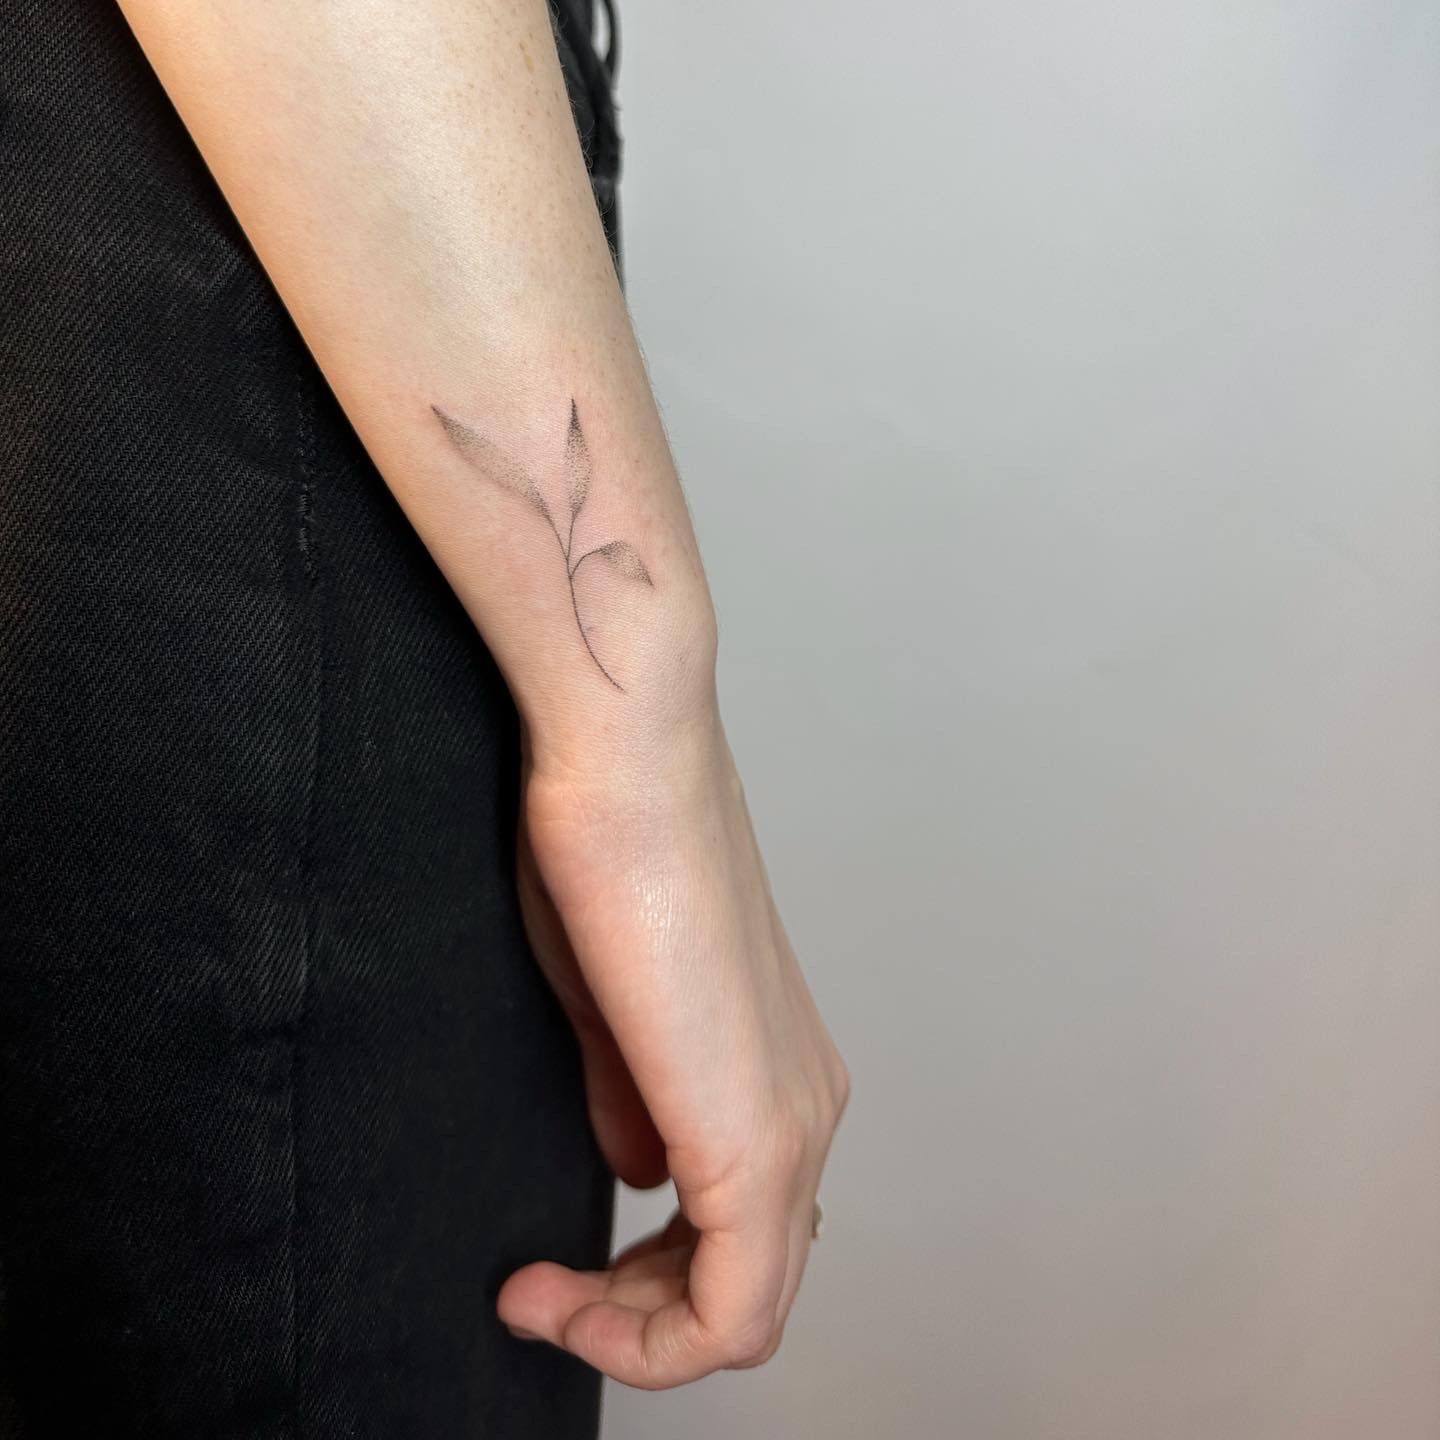 Vine Wrist Wrap Tattoo | Wrap tattoo, Rose tattoos on wrist, Gorgeous  tattoos